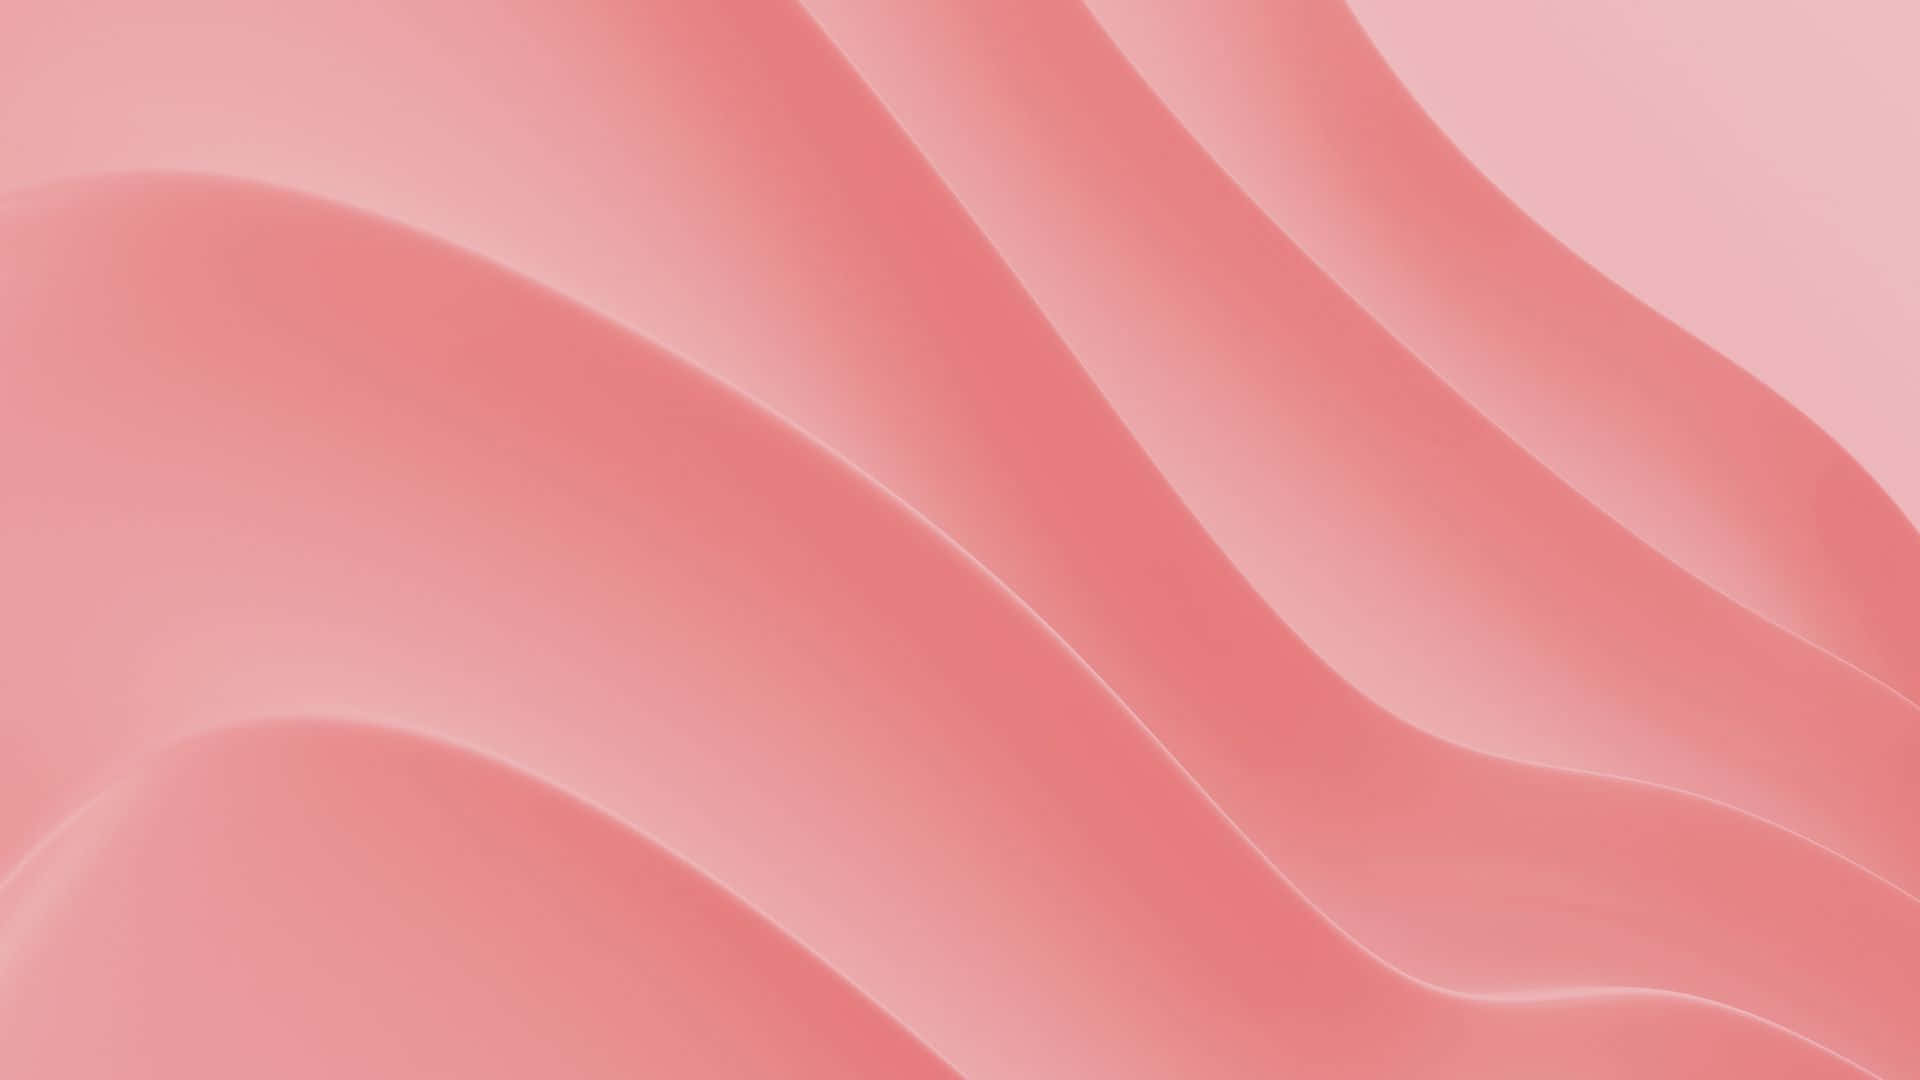 Vibrant Pink Abstract Art Wallpaper